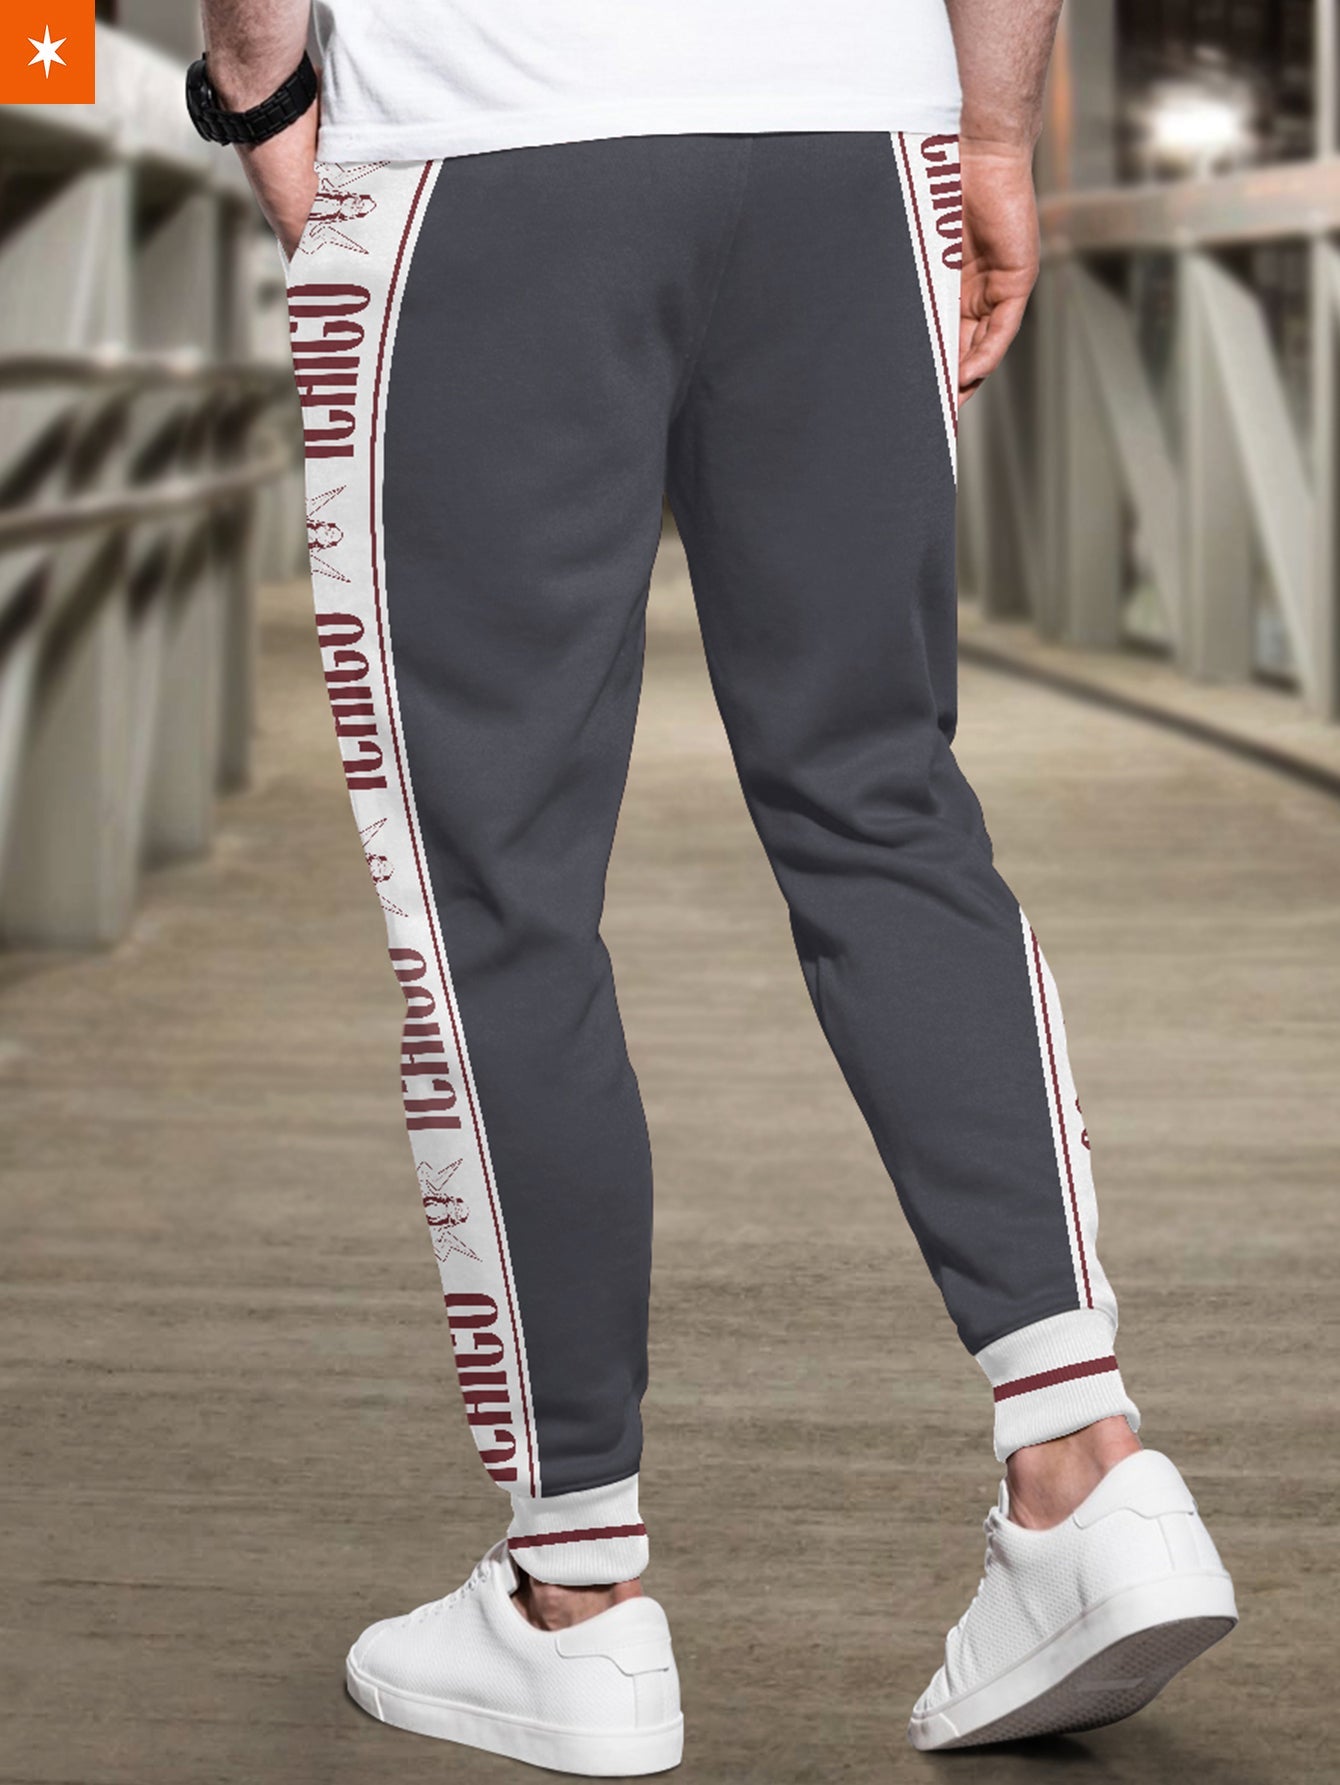 Men's Light Grey Light Weight Stretchy Slim Fit Stylish Printed Track Pants  at Rs 259/piece | Men Sports Pants in Gautam Budh Nagar | ID: 23944569097